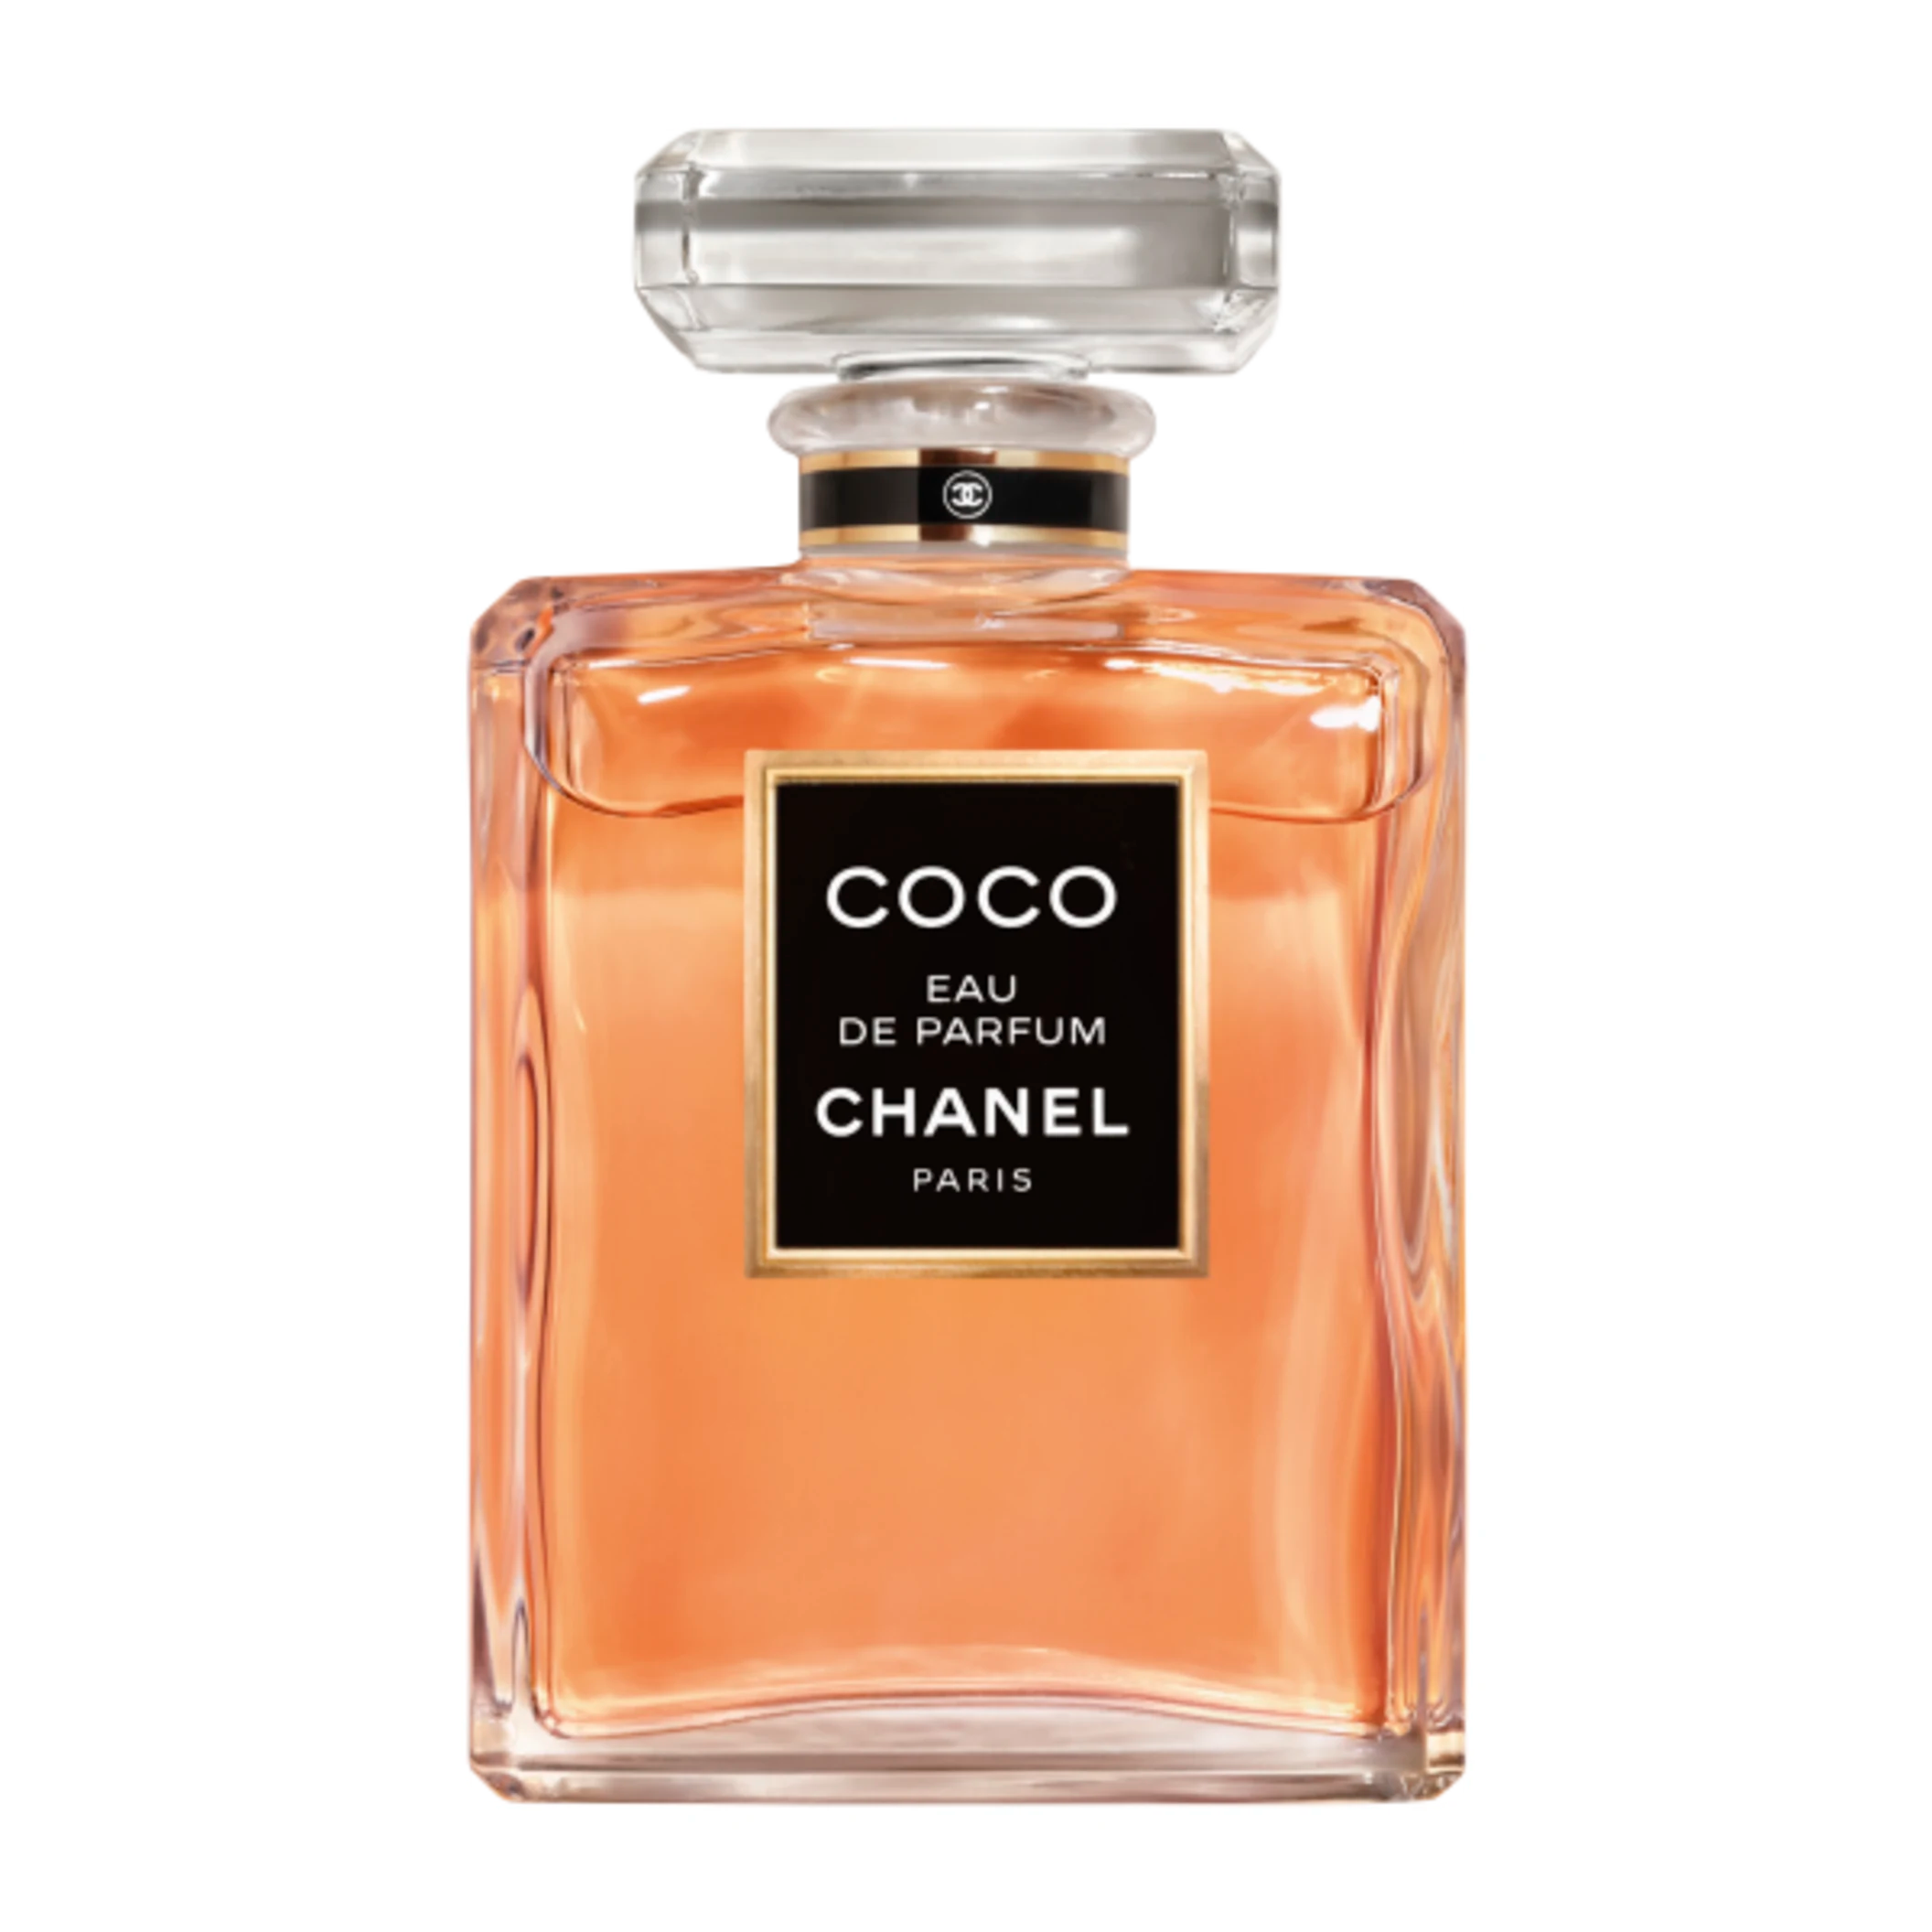 CHANEL - Coco Eau de Parfum